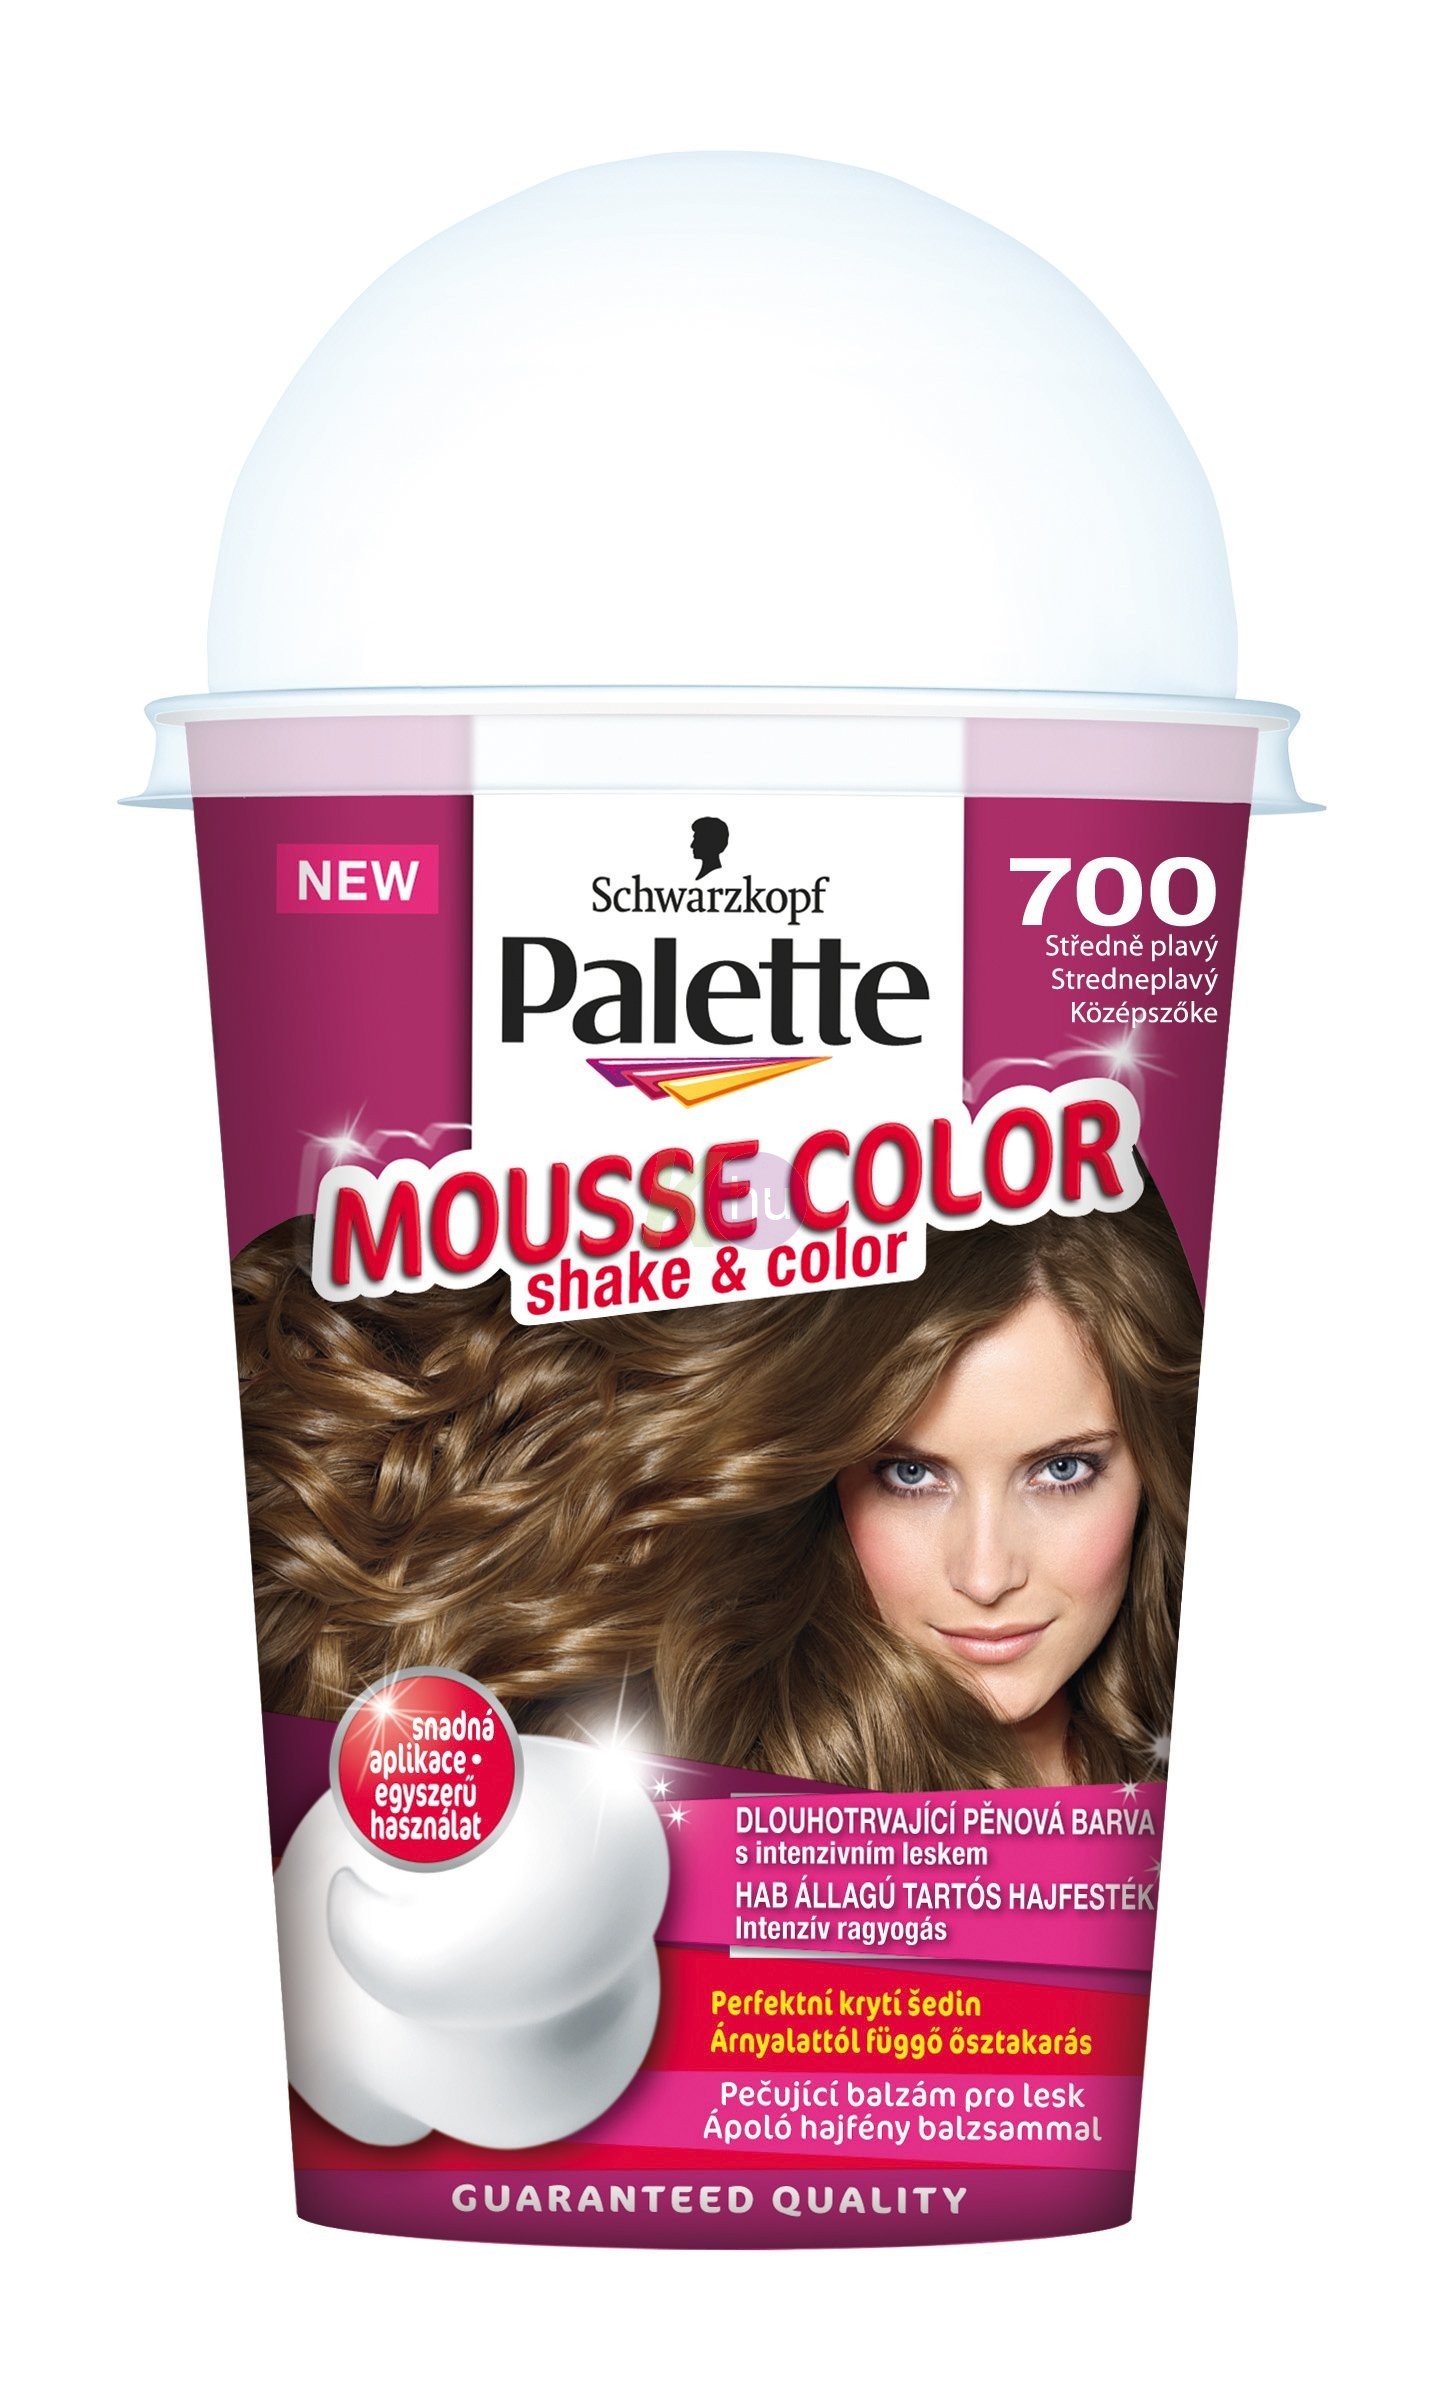 Palette Mousse Color 700 középszőke 13100869